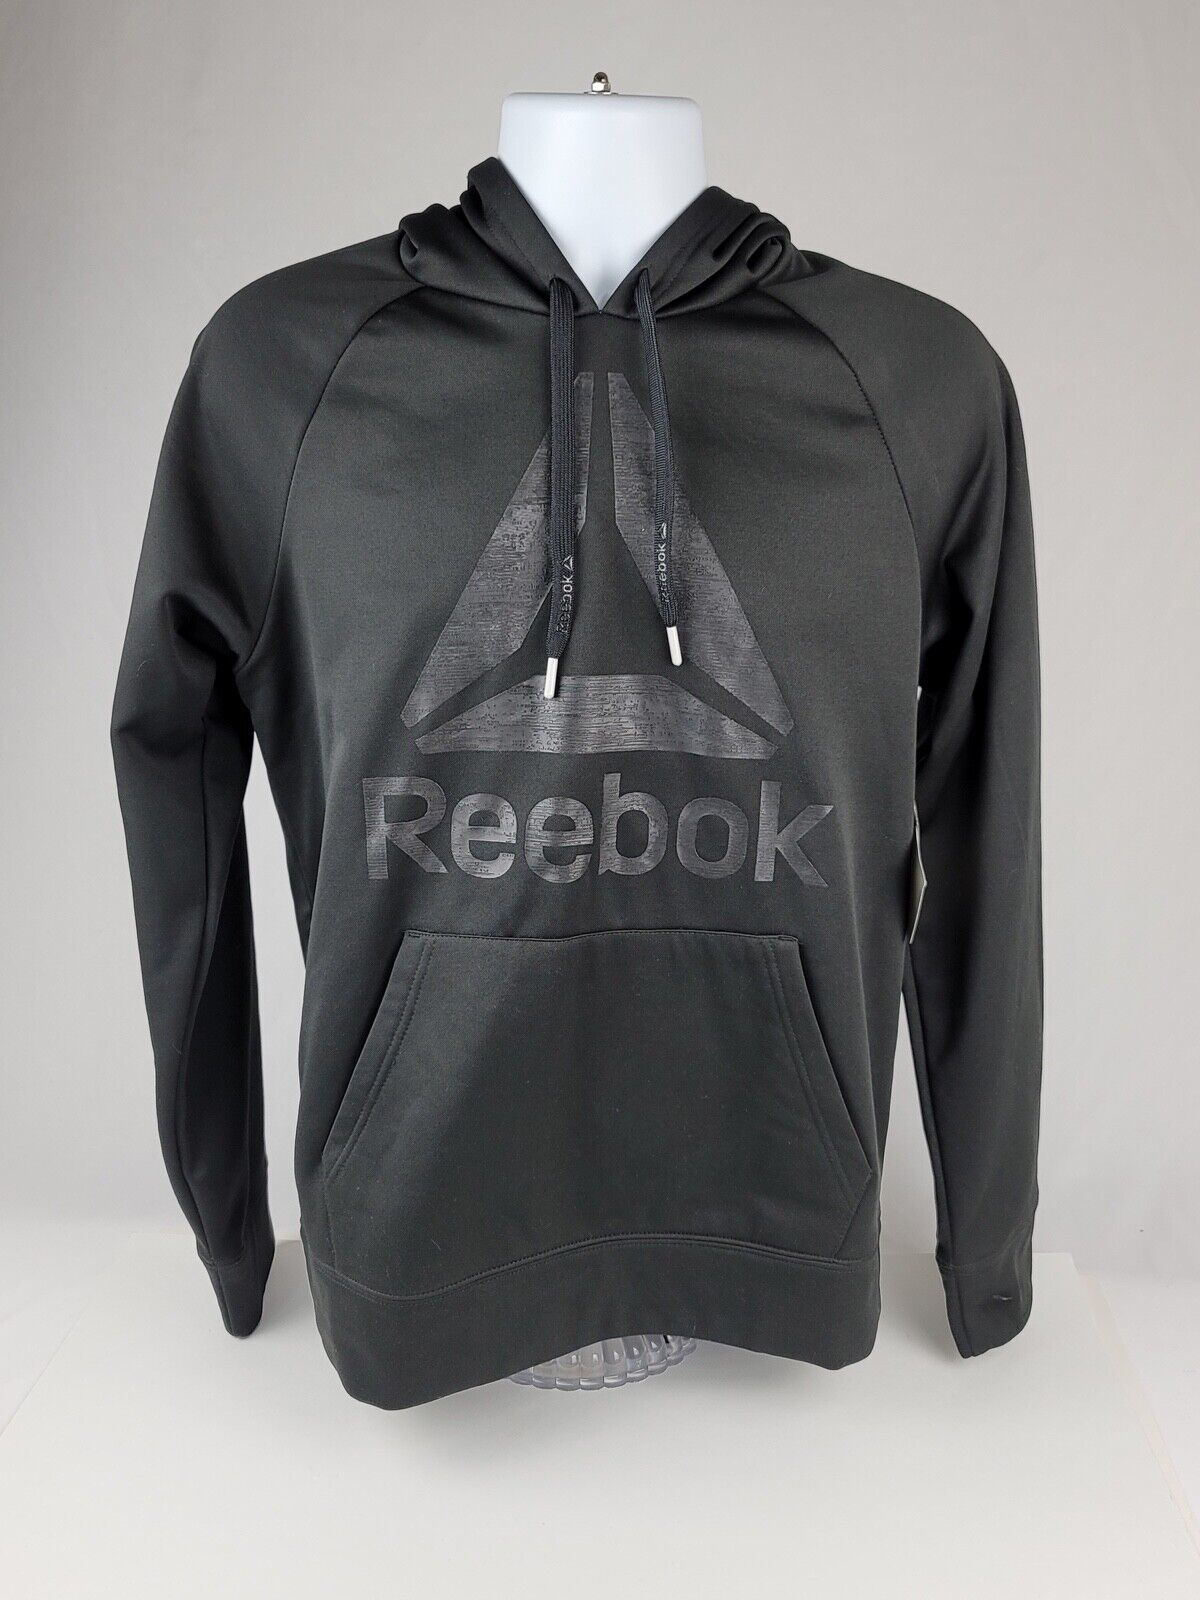 New Reebok Core Delta 2.0 Hoodie Sweatshirt Men's Small Black New w/ tags - $31.67